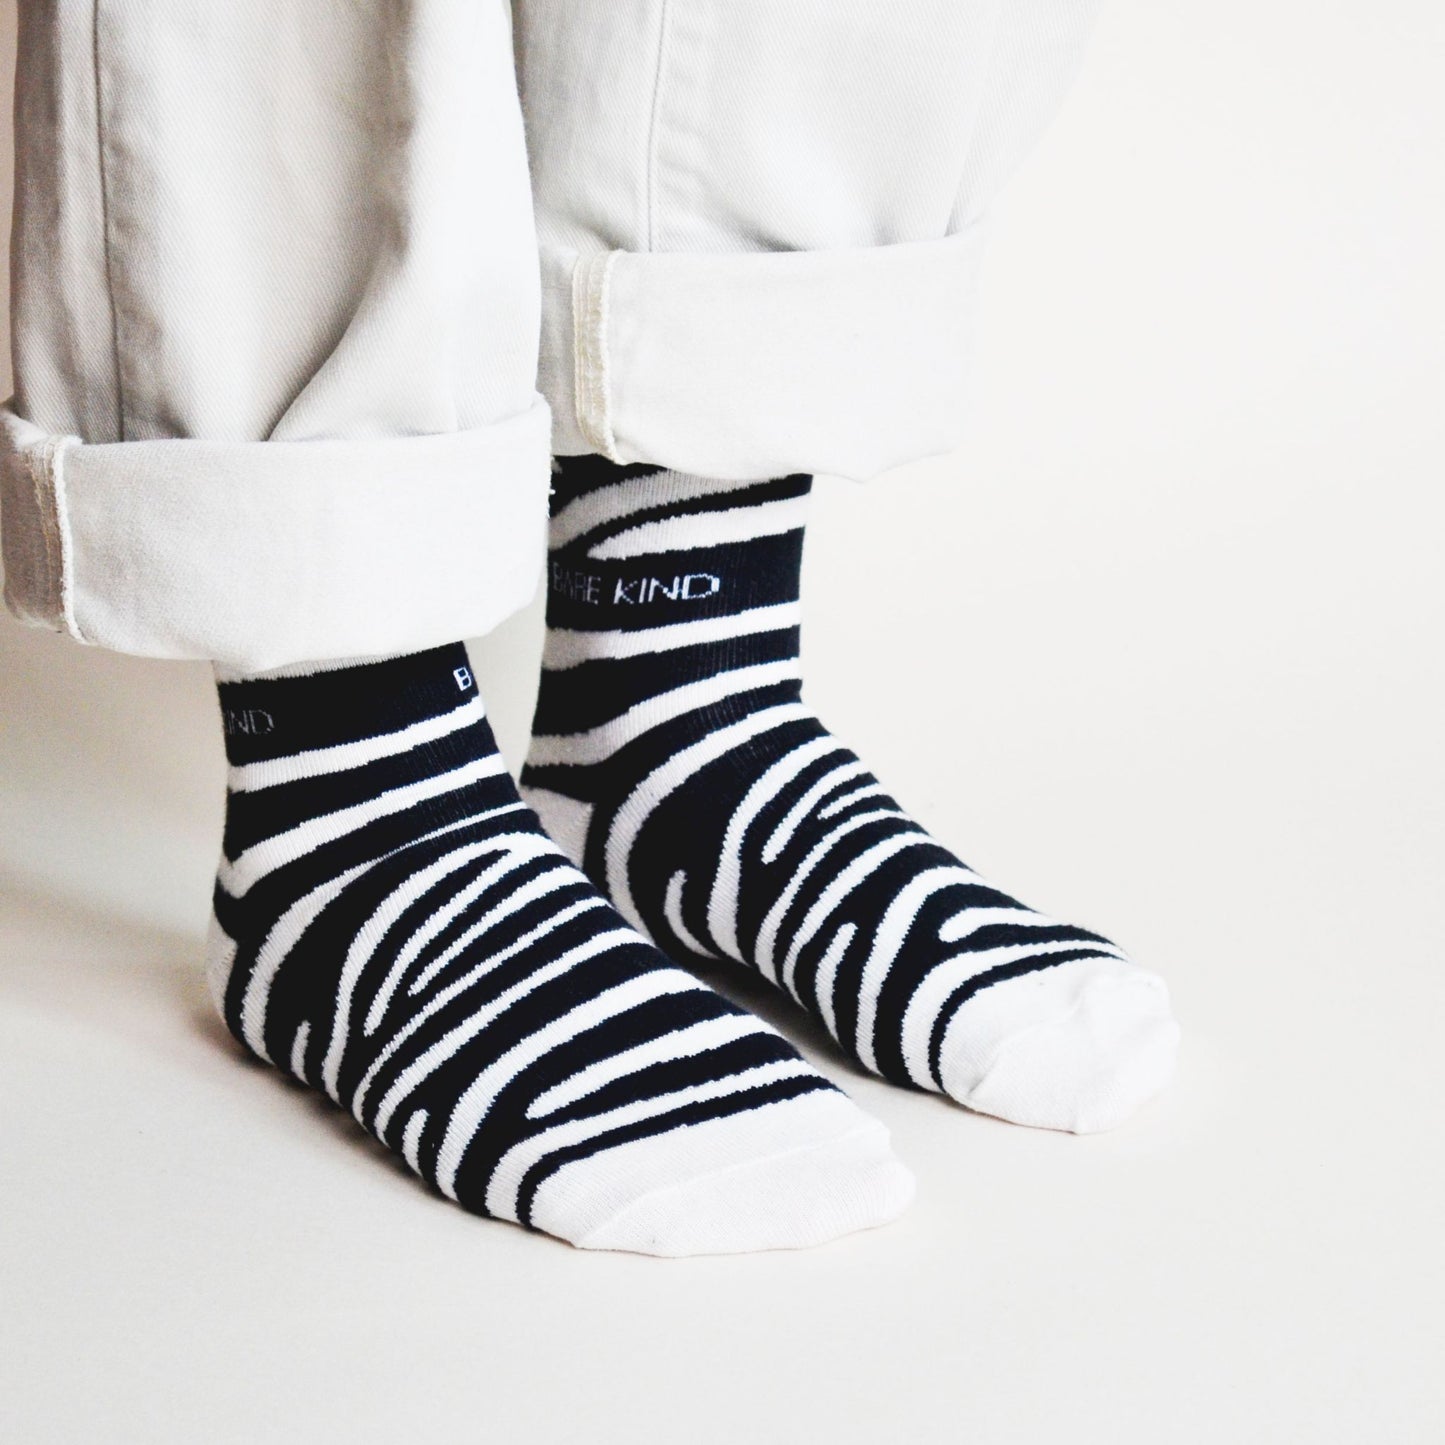 Socks Taking Care of Zebras  Bamboo Socks in 2 Adult Sizes - worn